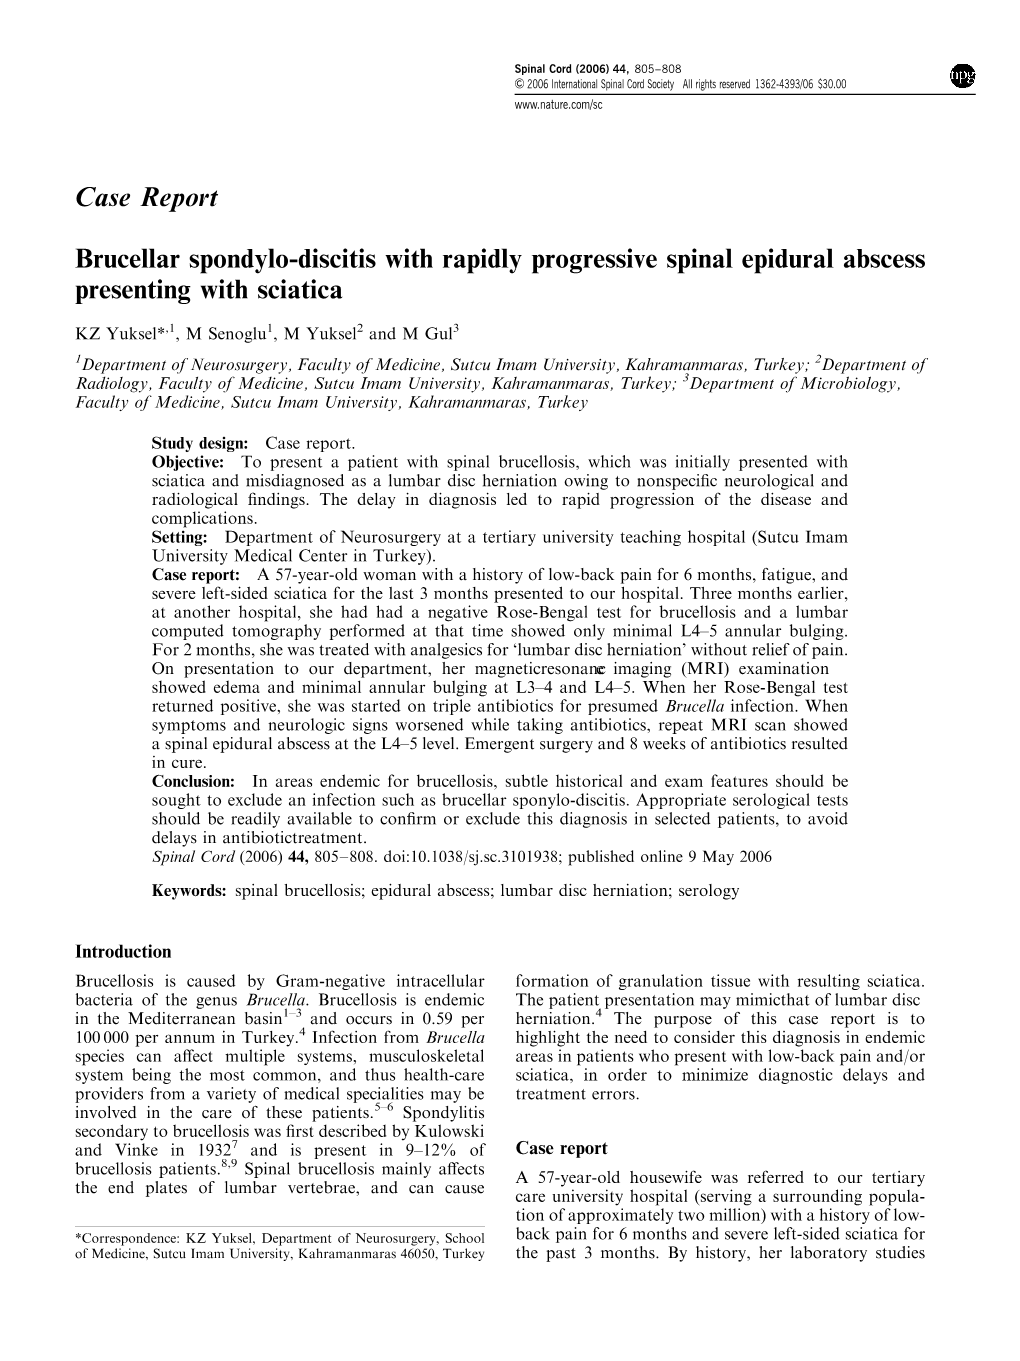 Brucellar Spondylo-Discitis with Rapidly Progressive Spinal Epidural Abscess Presenting with Sciatica